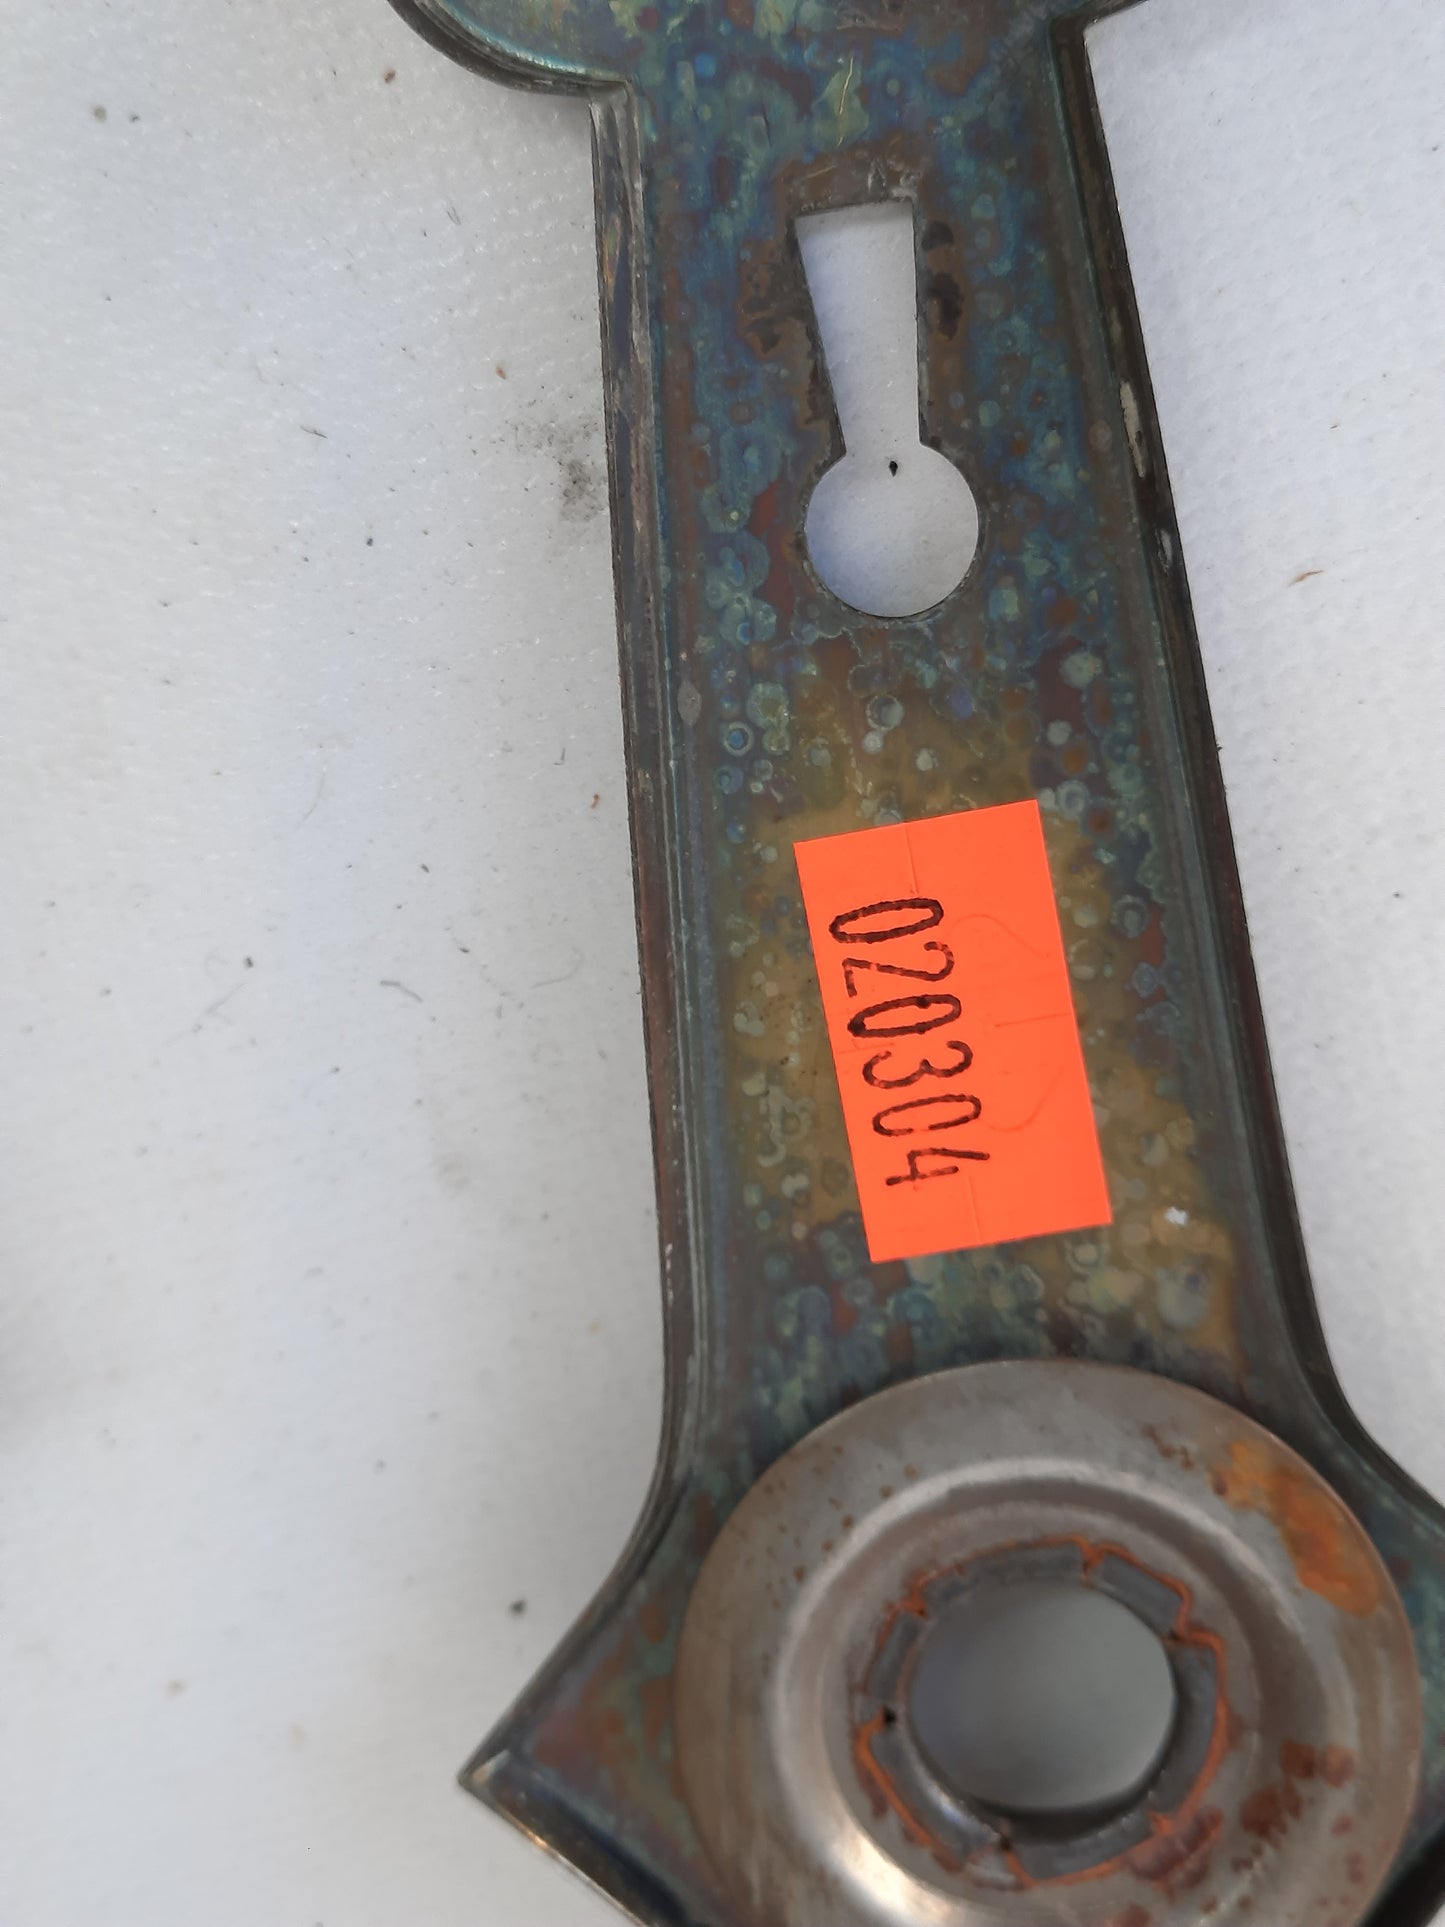 Two Vintage Steel Art Deco Doorknob Backplates, Pair of Deco Escutcheons 020304